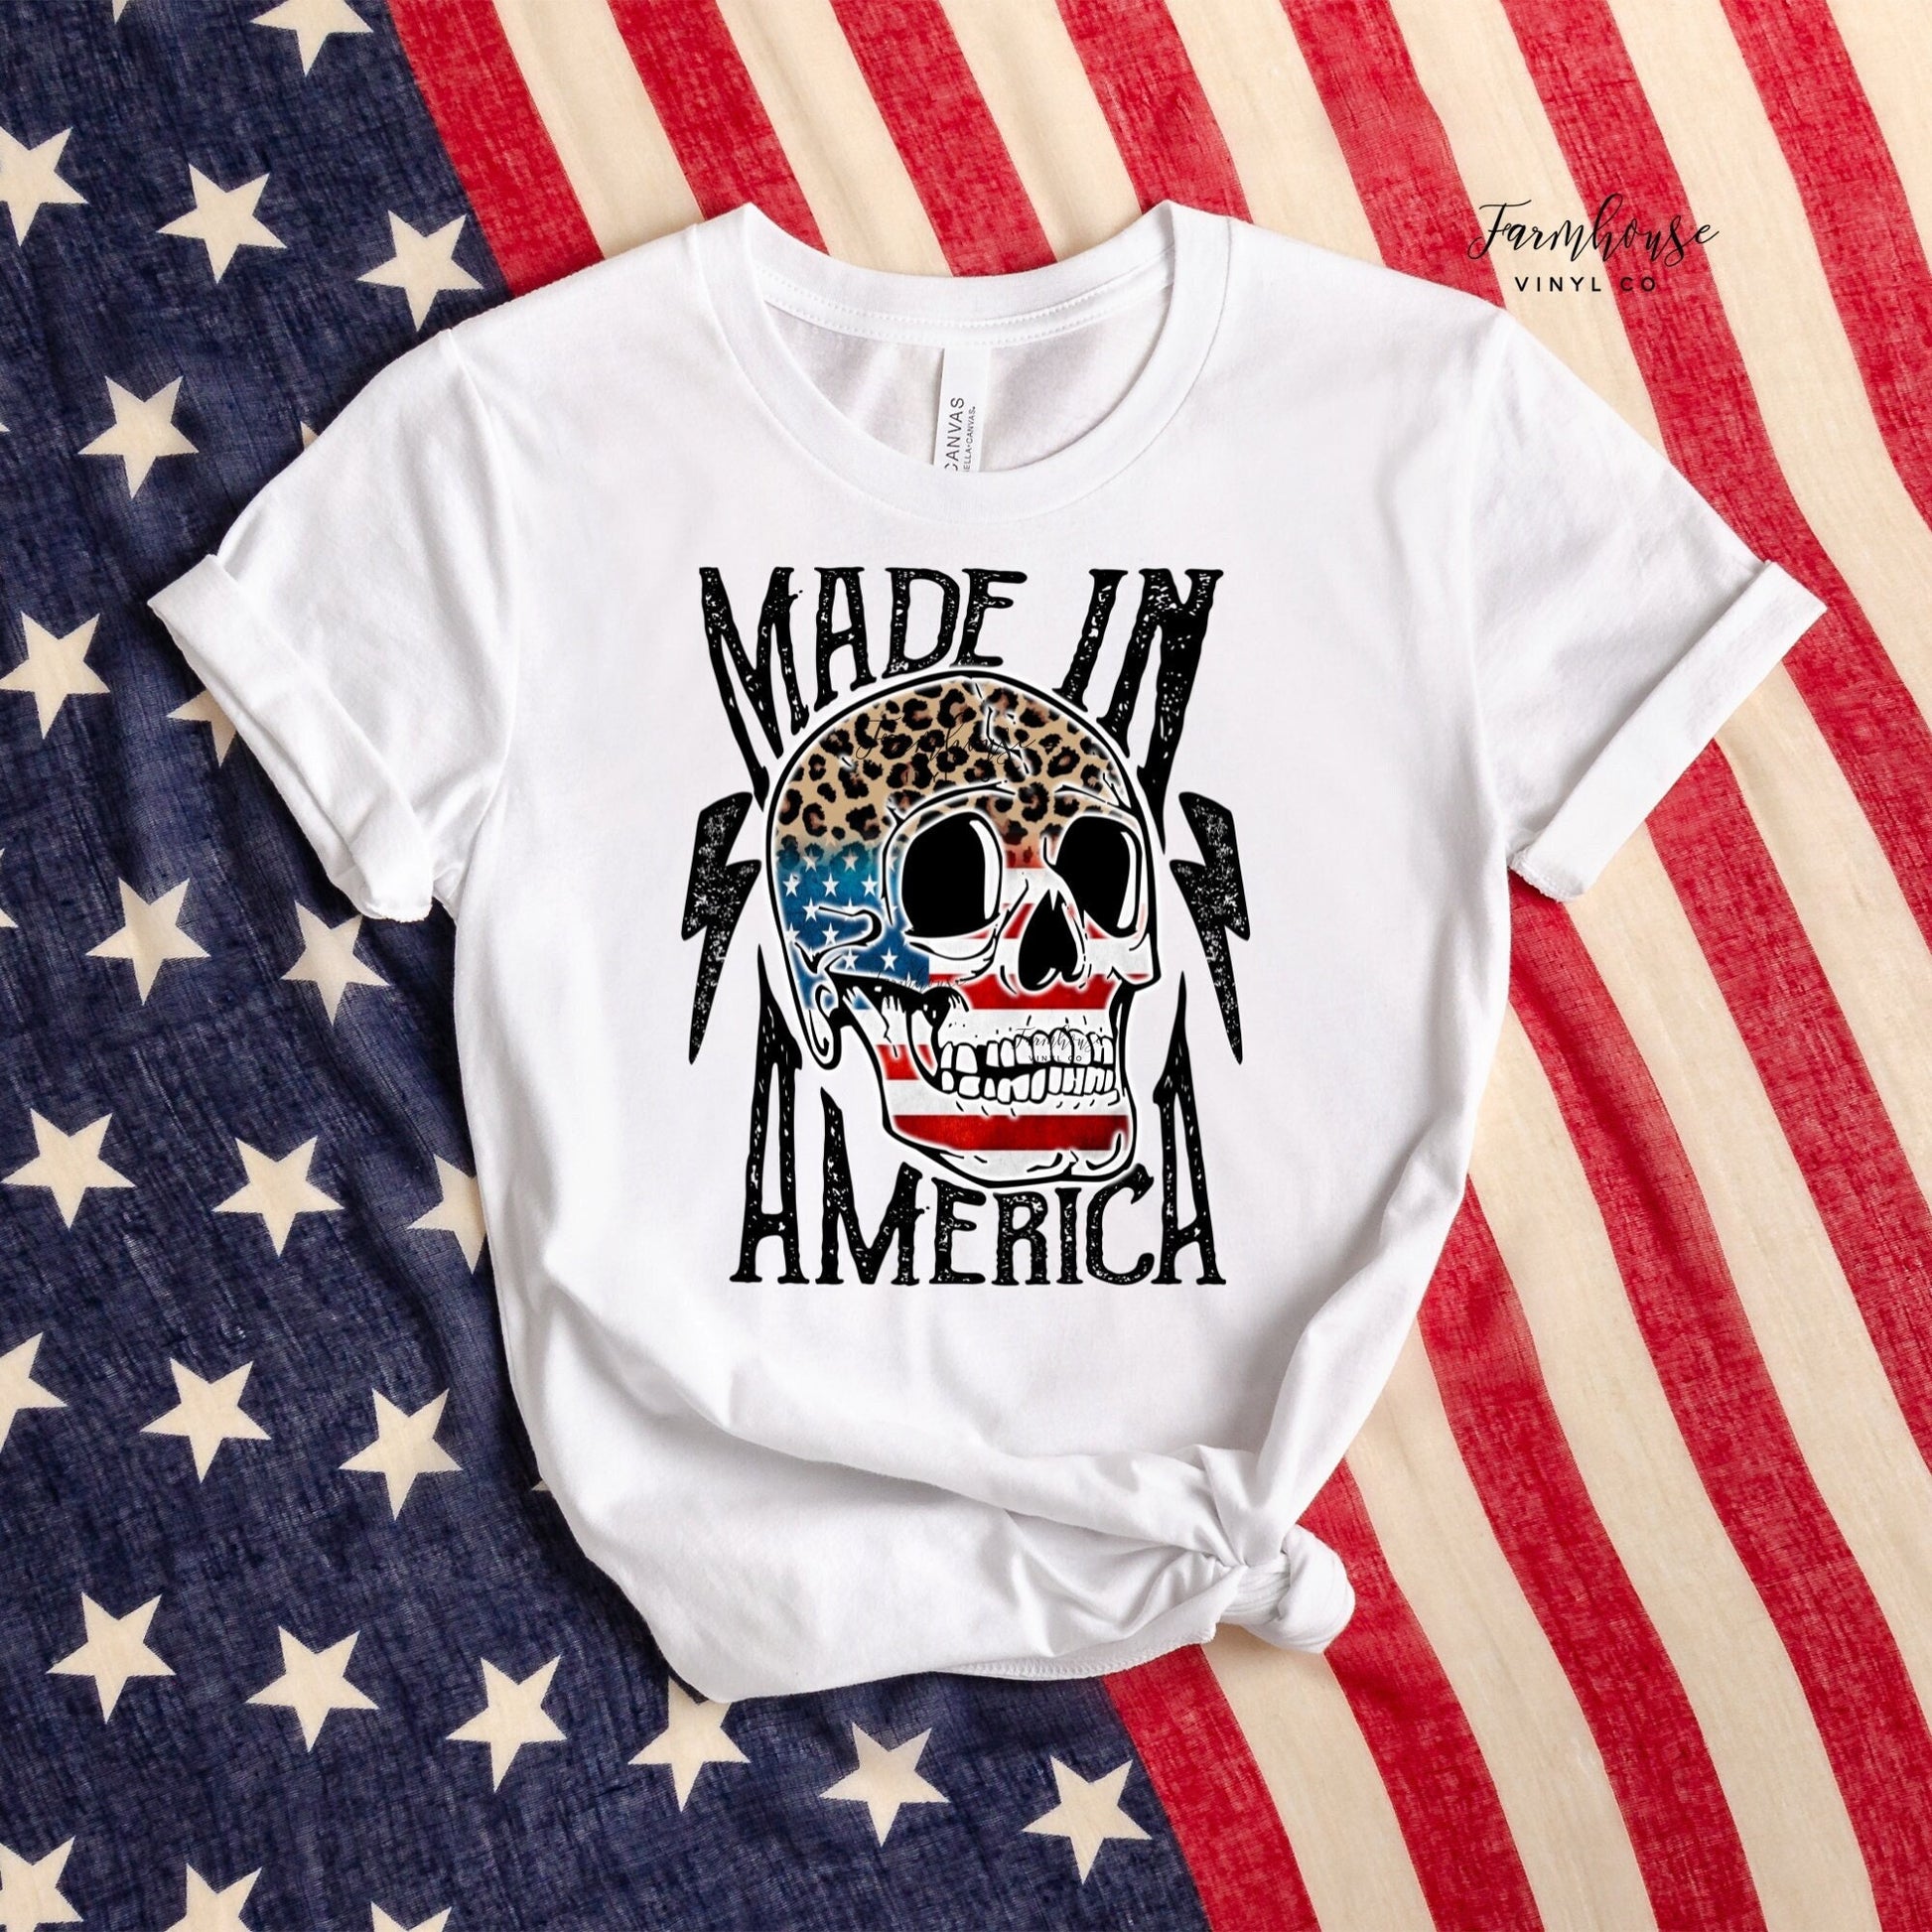 Made in America Shirt - Farmhouse Vinyl Co